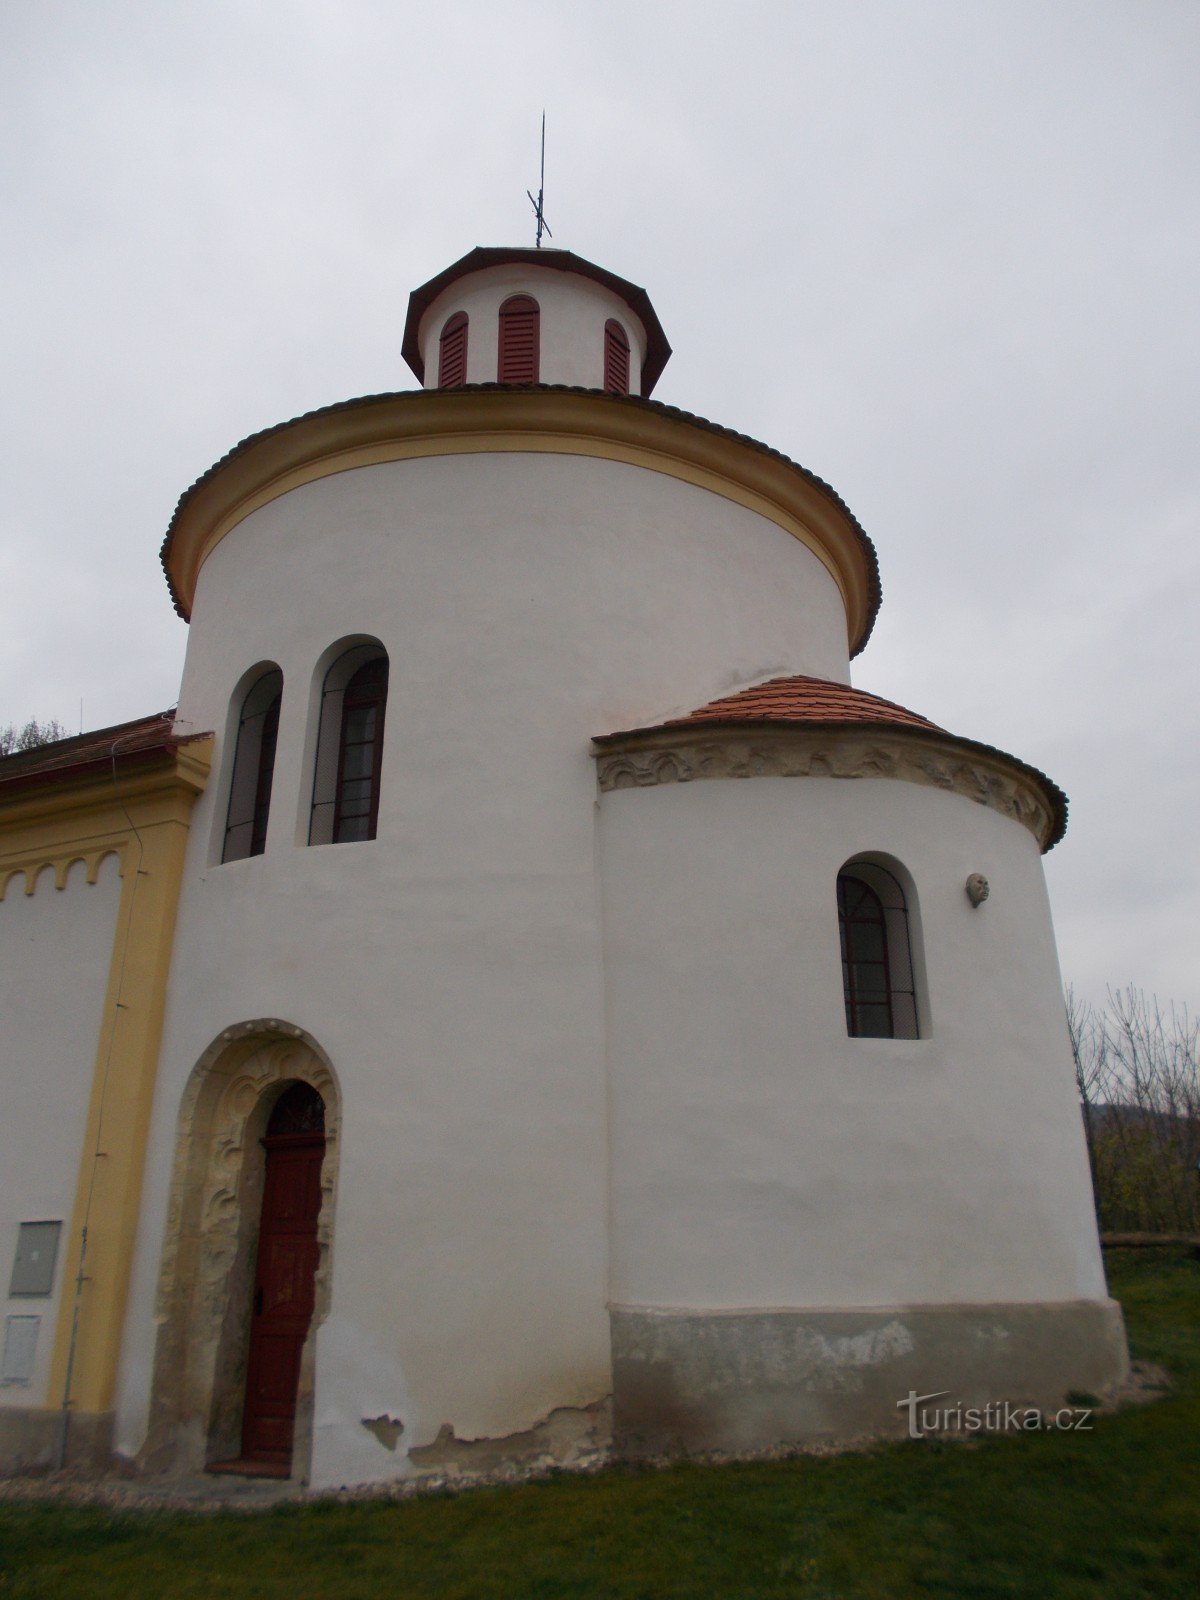 Kirche St. Peter und Paul in Želkovice.